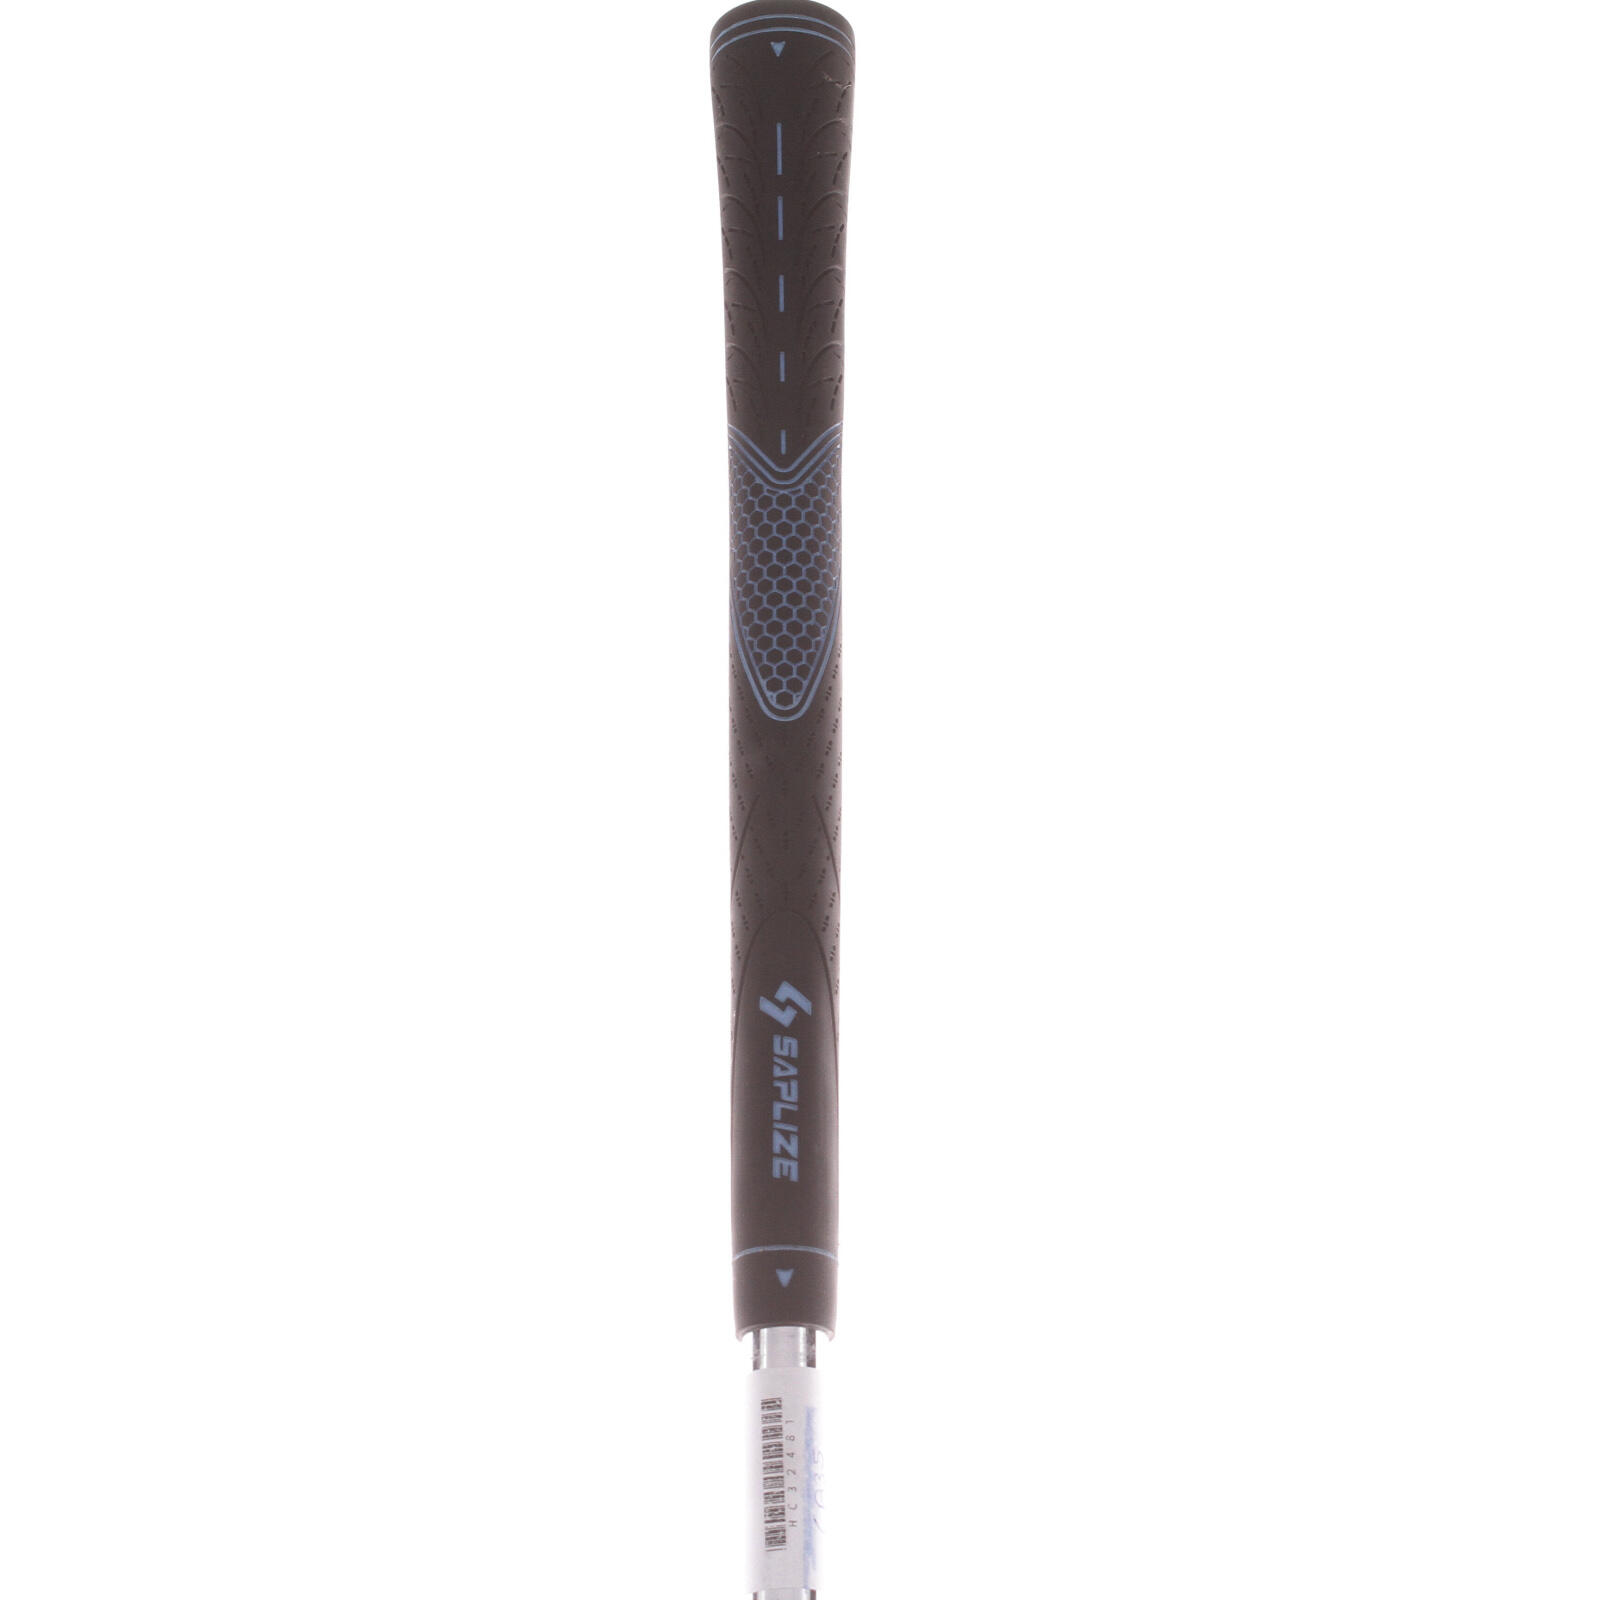 USED - Utility Wedge Ping i200 50* Steel Shaft Stiff Flex Right Handed - GRADE B 5/5